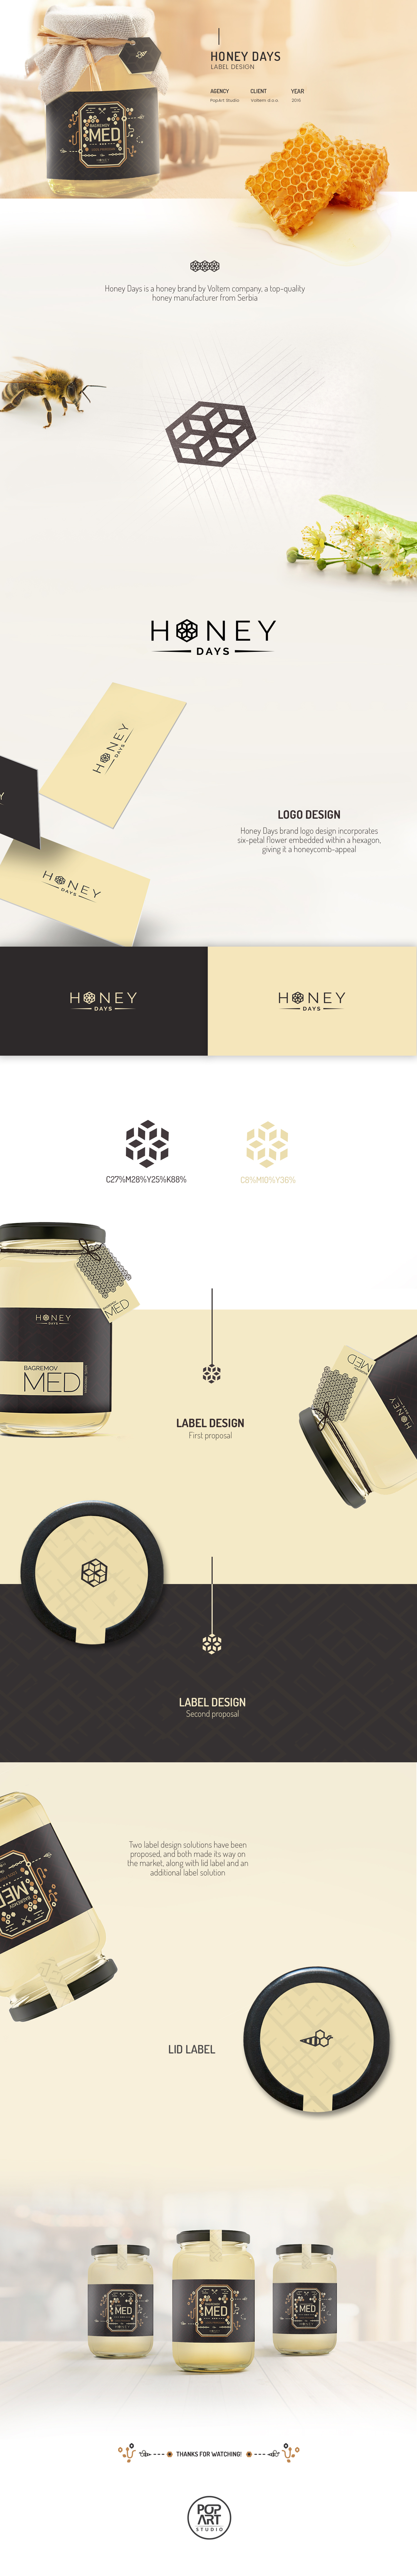 Honey label and banderole design